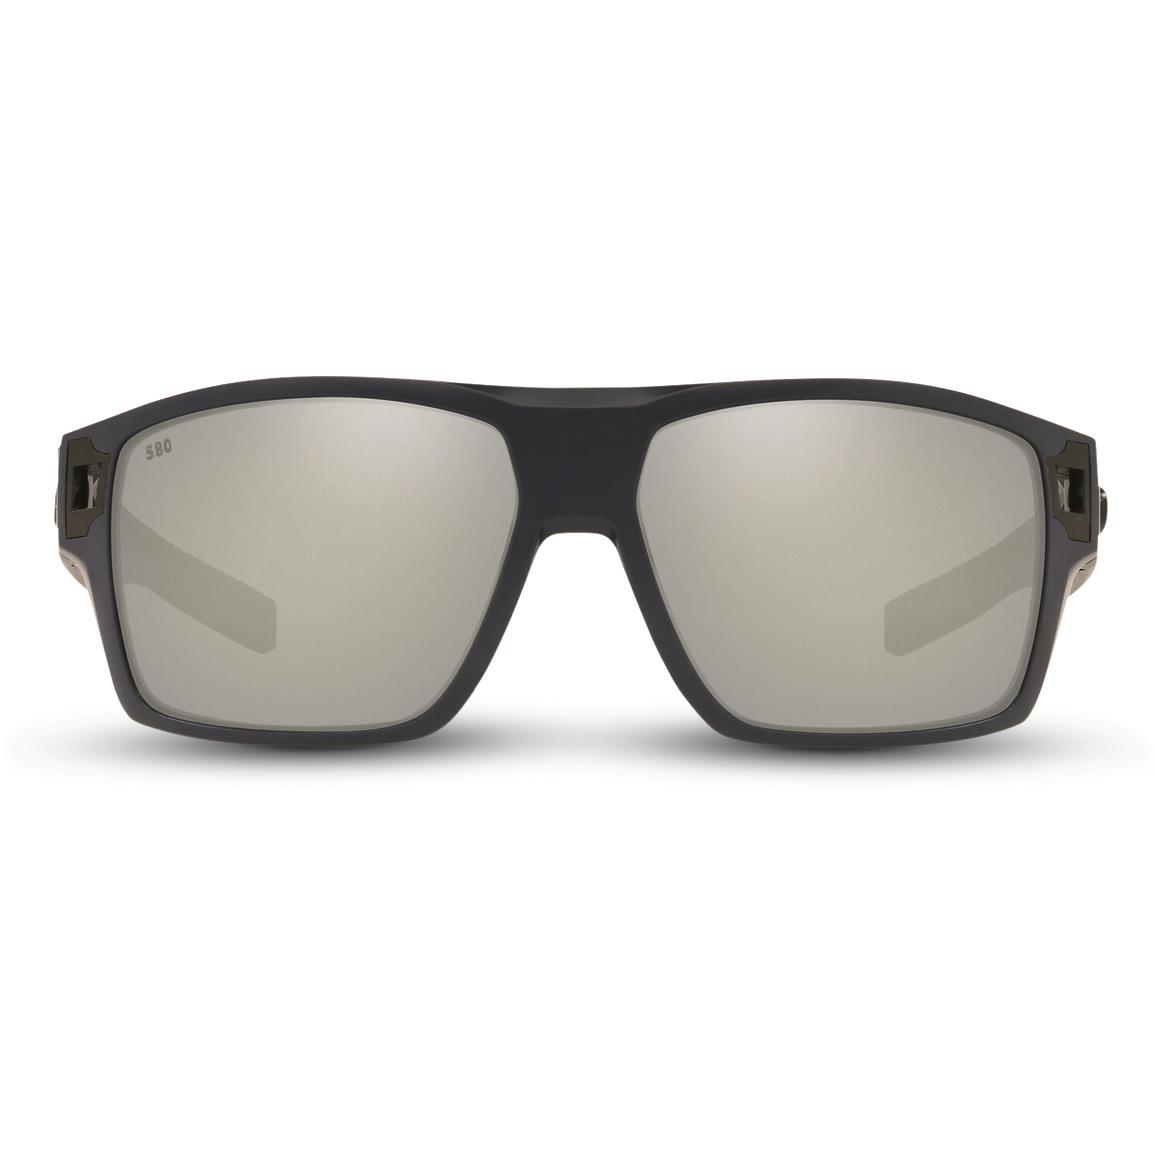 BlueWater Polarized Bifocal Sunglasses, Full Frame - 220942, Sunglasses ...